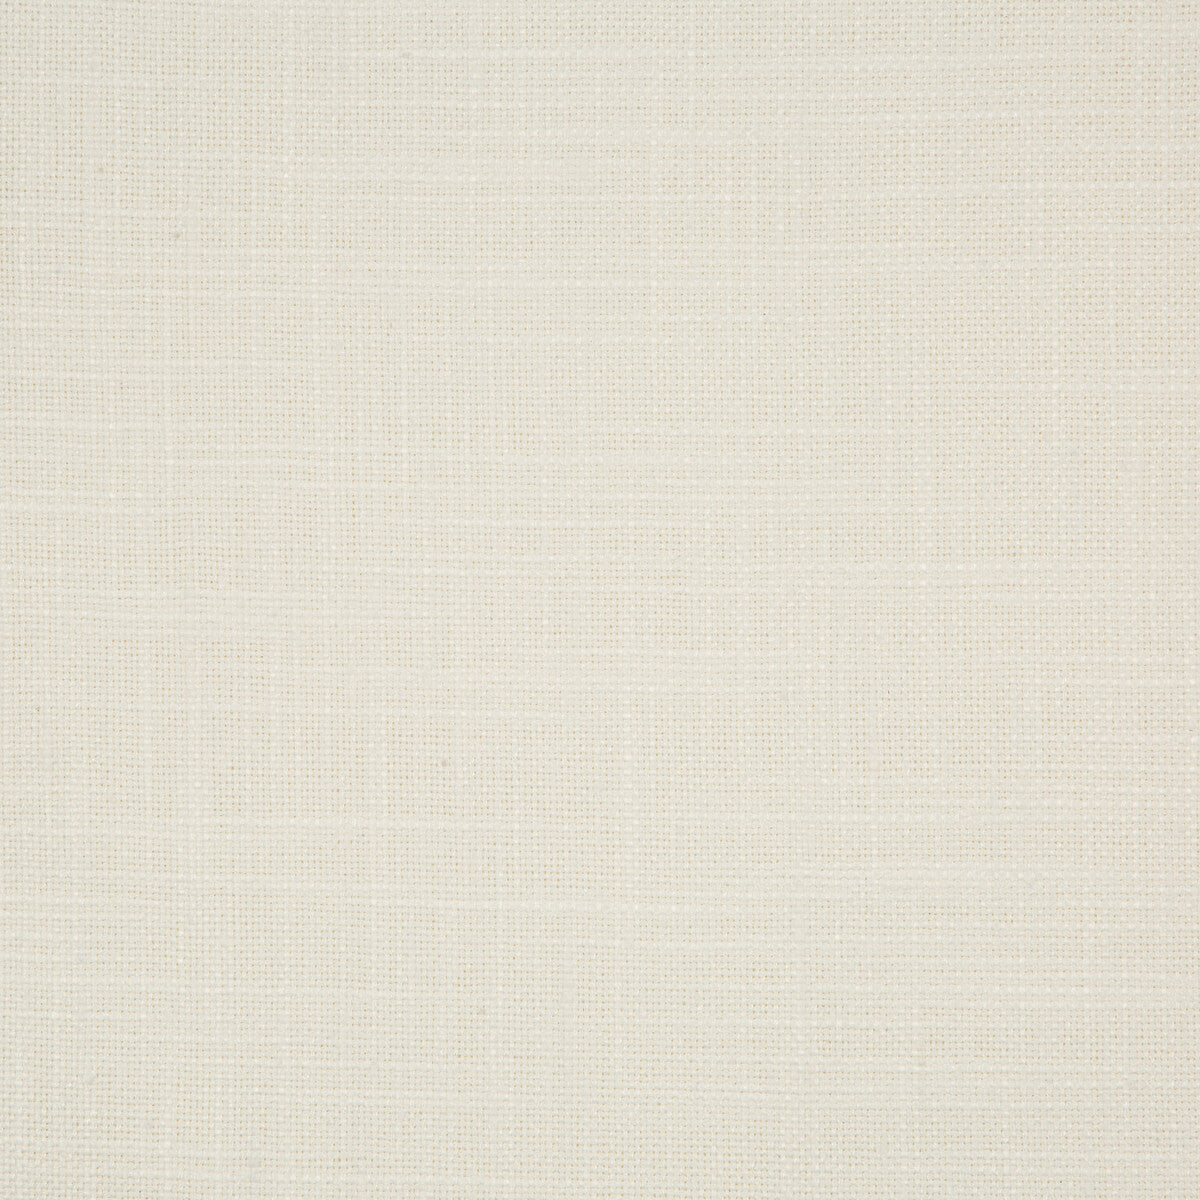 Kravet Smart fabric in 35955-101 color - pattern 35955.101.0 - by Kravet Smart in the Performance Kravetarmor collection